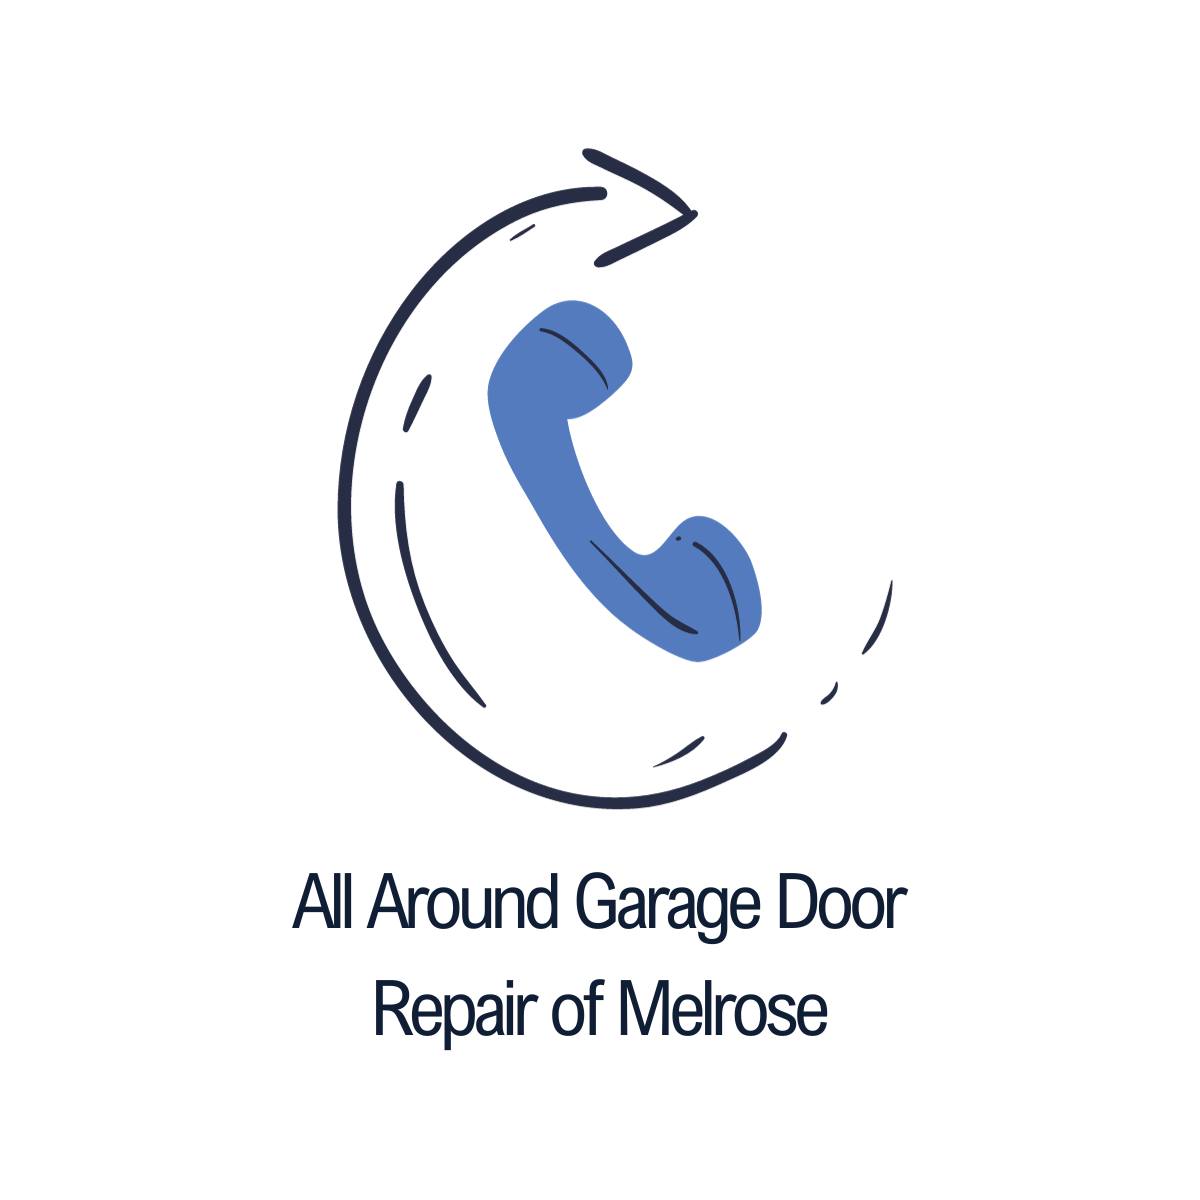 All Around Garage Door Repair of Melrose